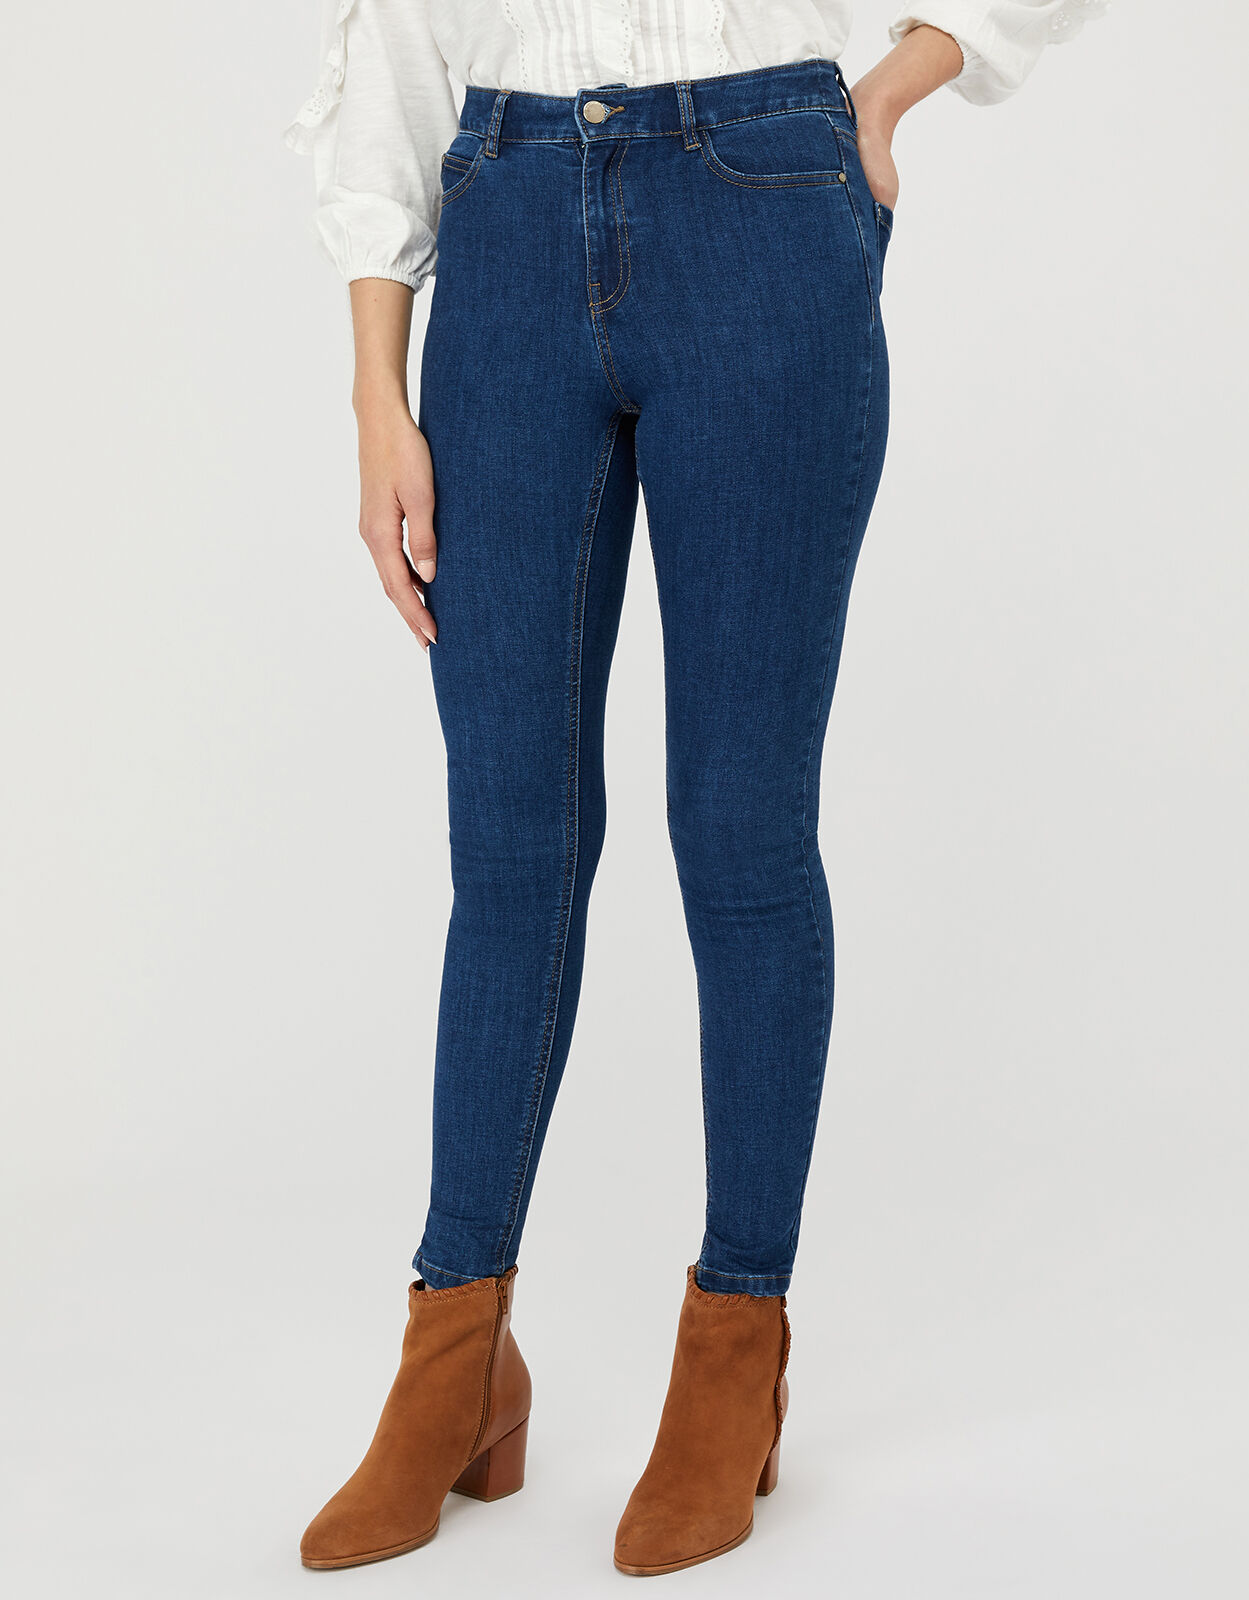 jeans short length